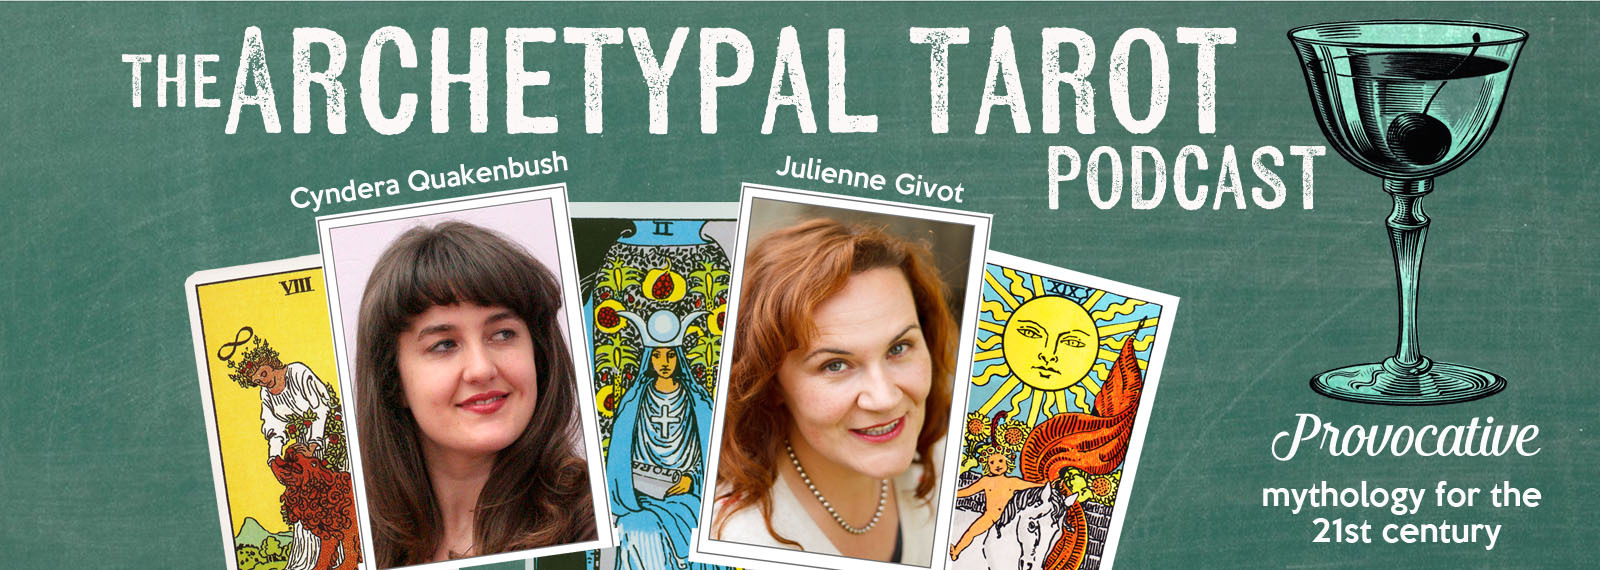 The Archetypal Tarot Podcast